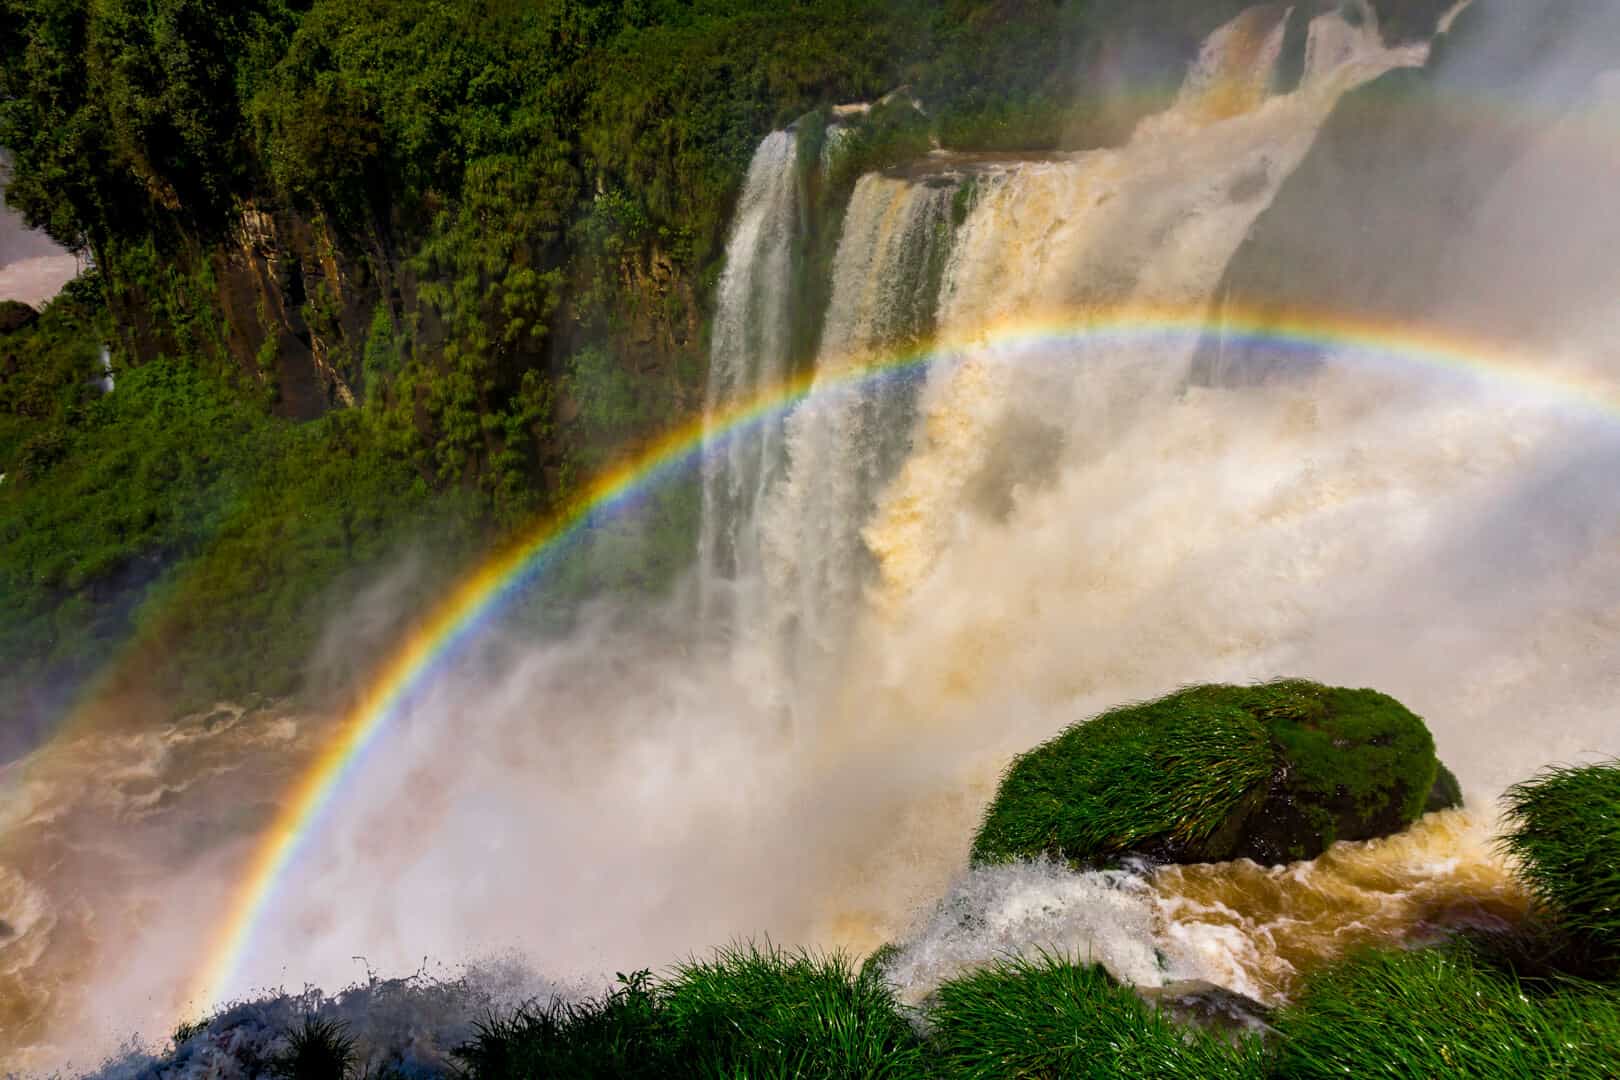 Iguazu falls in Argentina